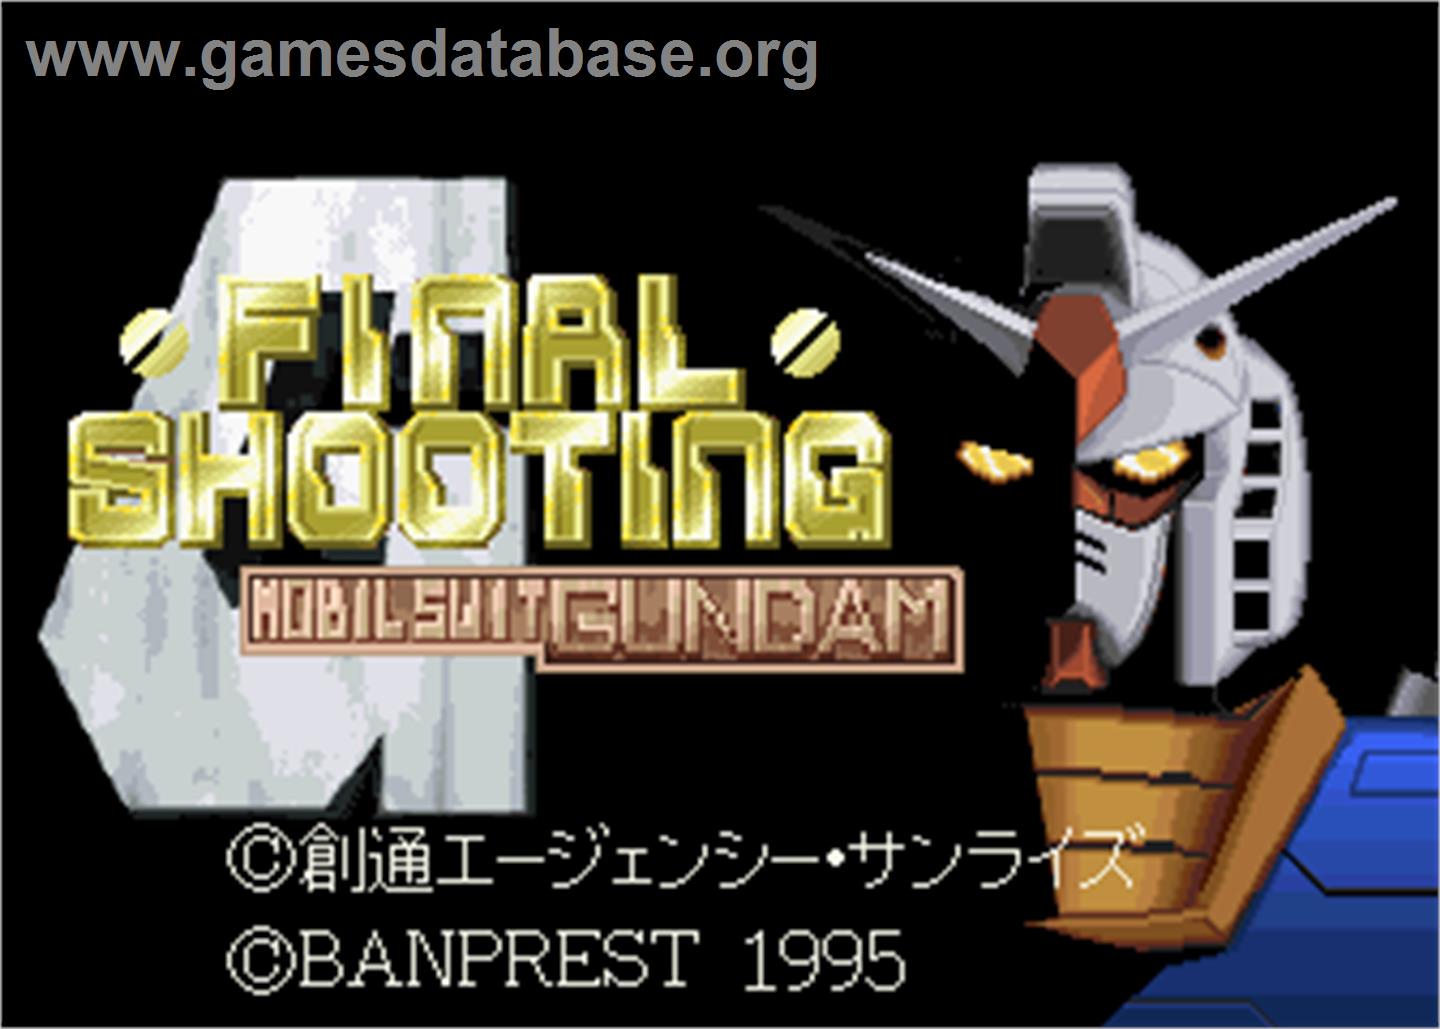 Mobil Suit Gundam Final Shooting - Arcade - Artwork - Title Screen